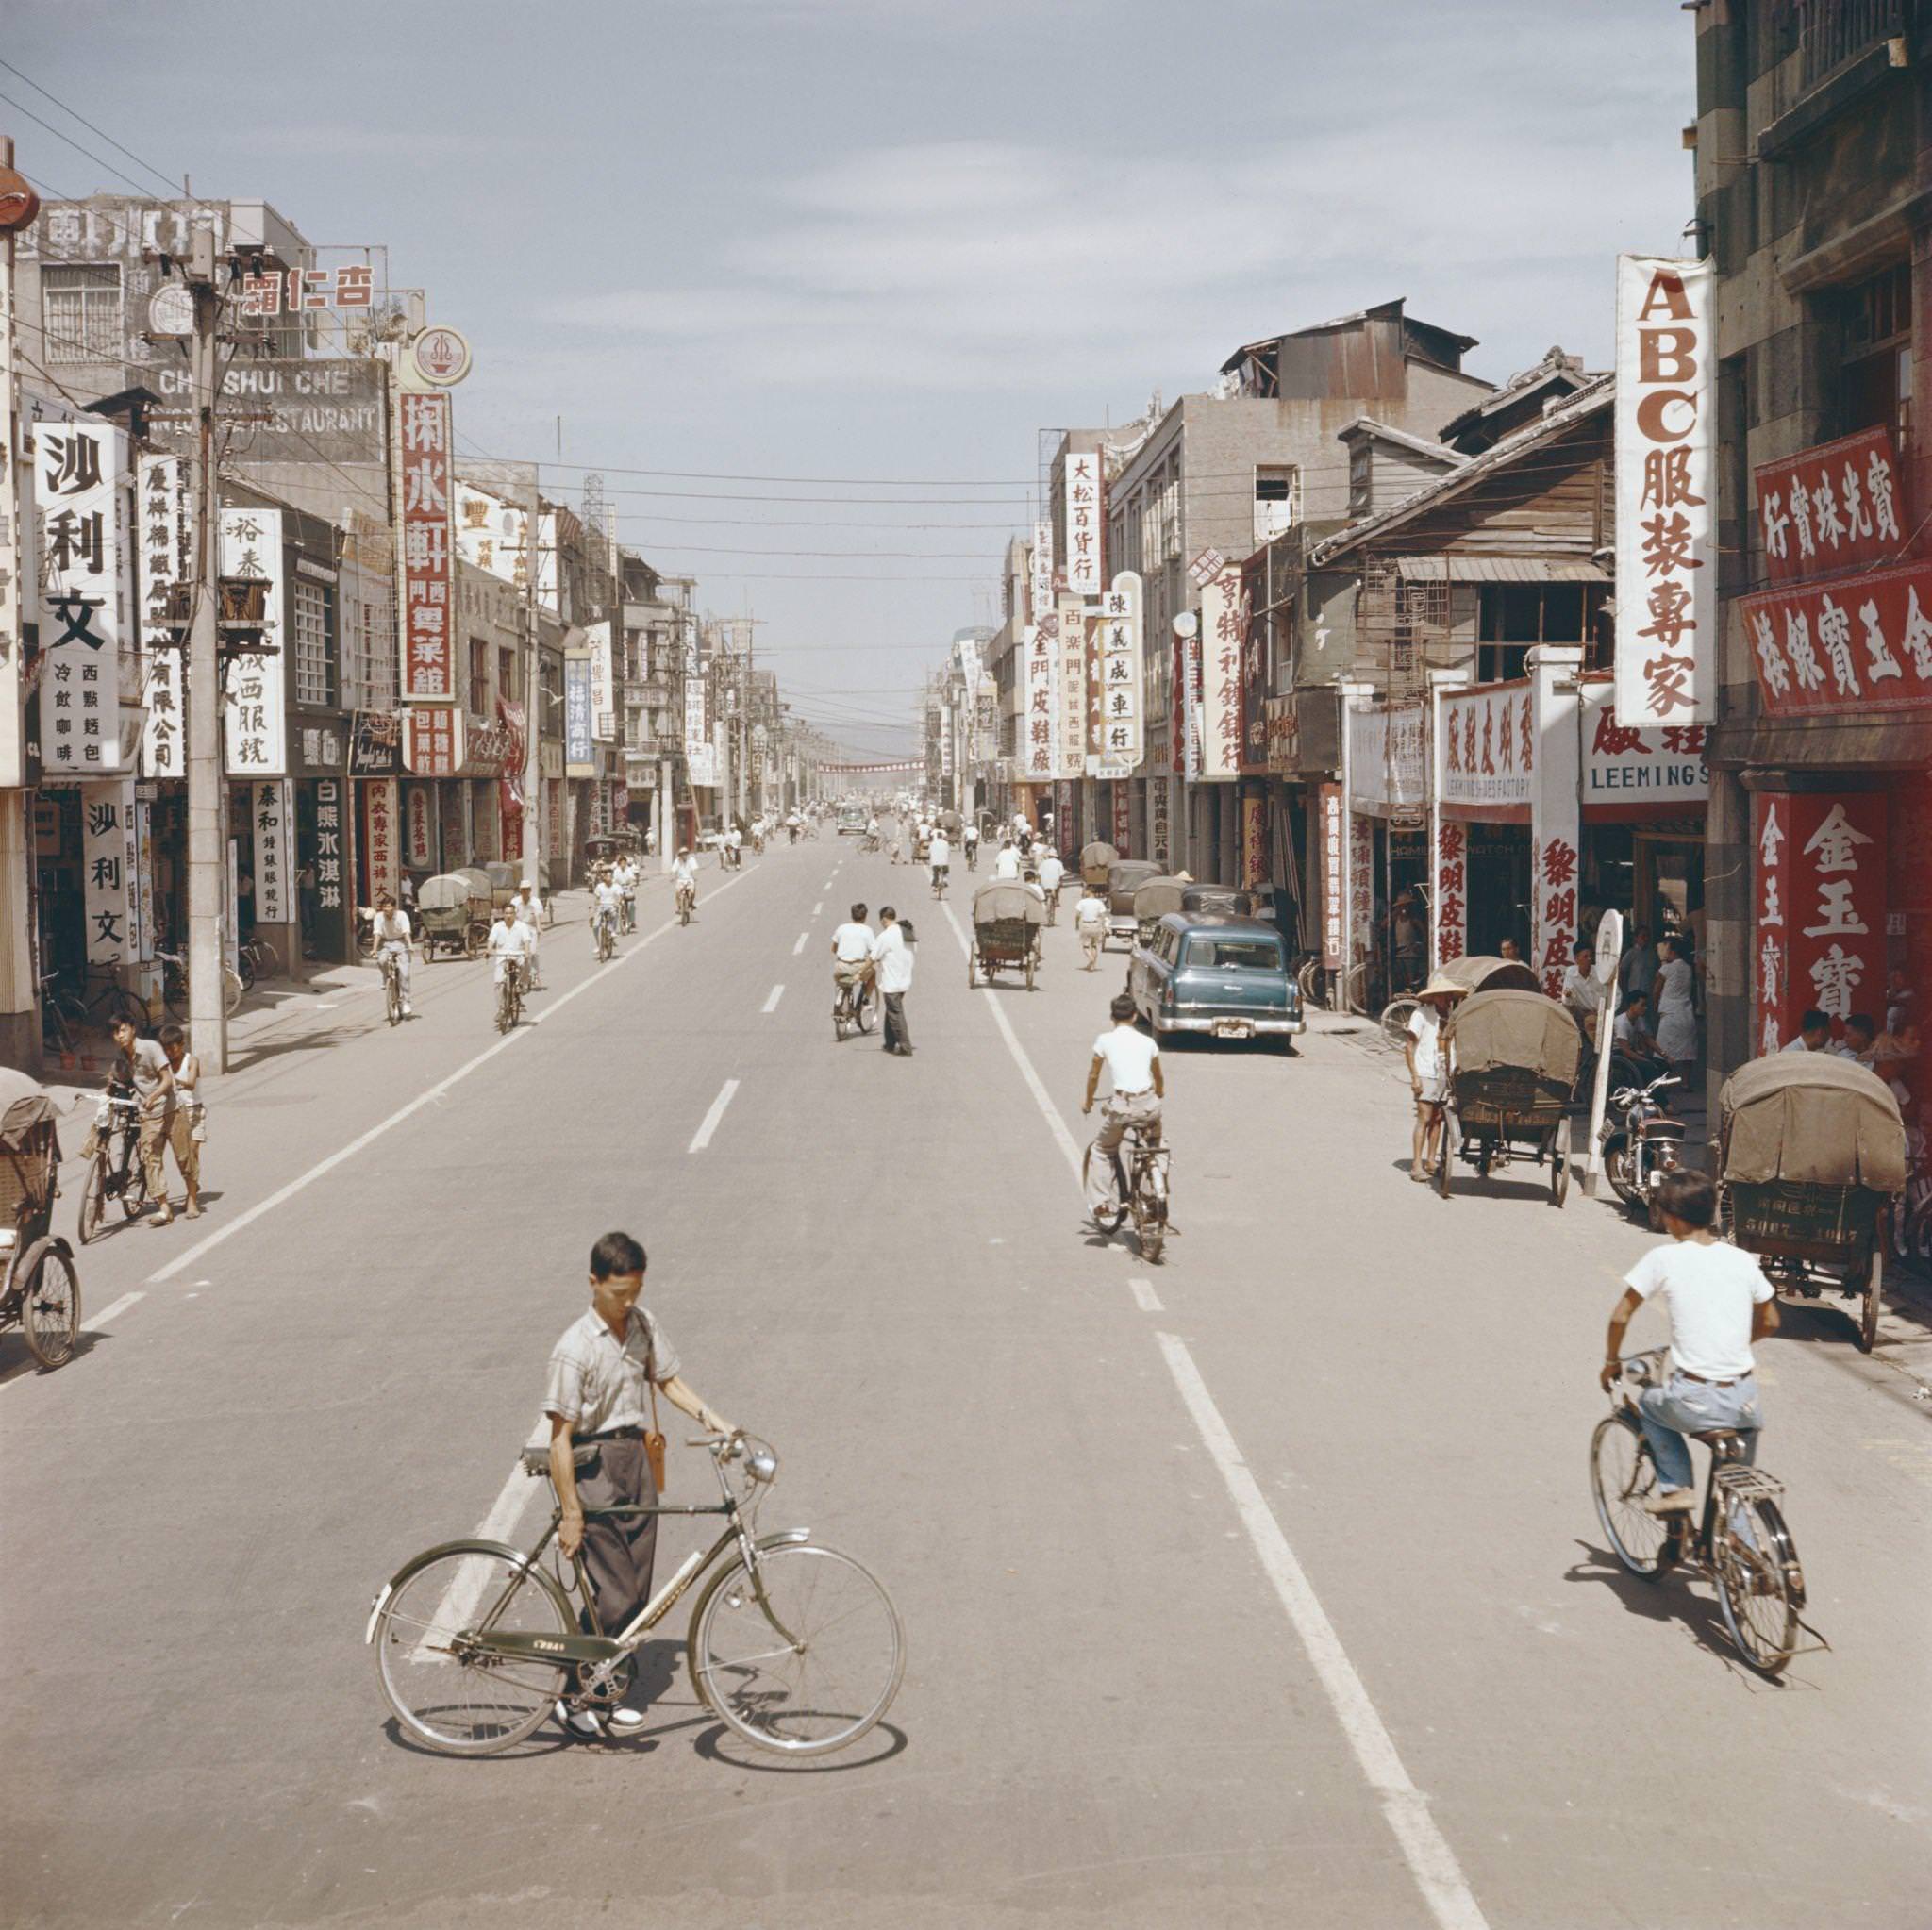 A street in Taiwan (Republic of China), 1957.